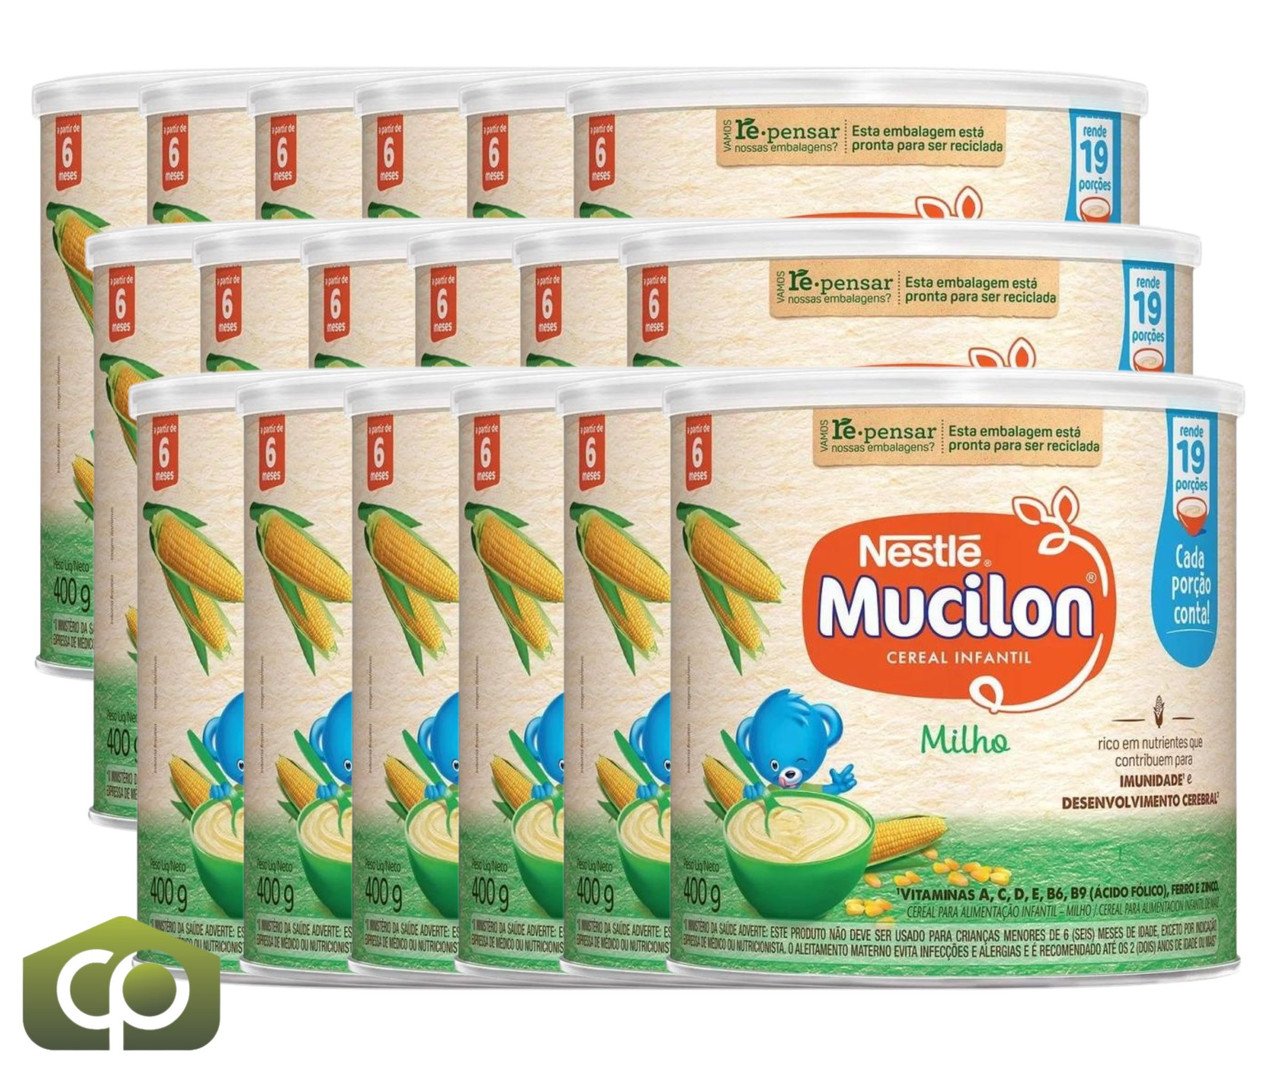 Nestlé Mucilon Corn Cereal (18/Case) 400g - Nutritious Baby Food - Chicken Pieces